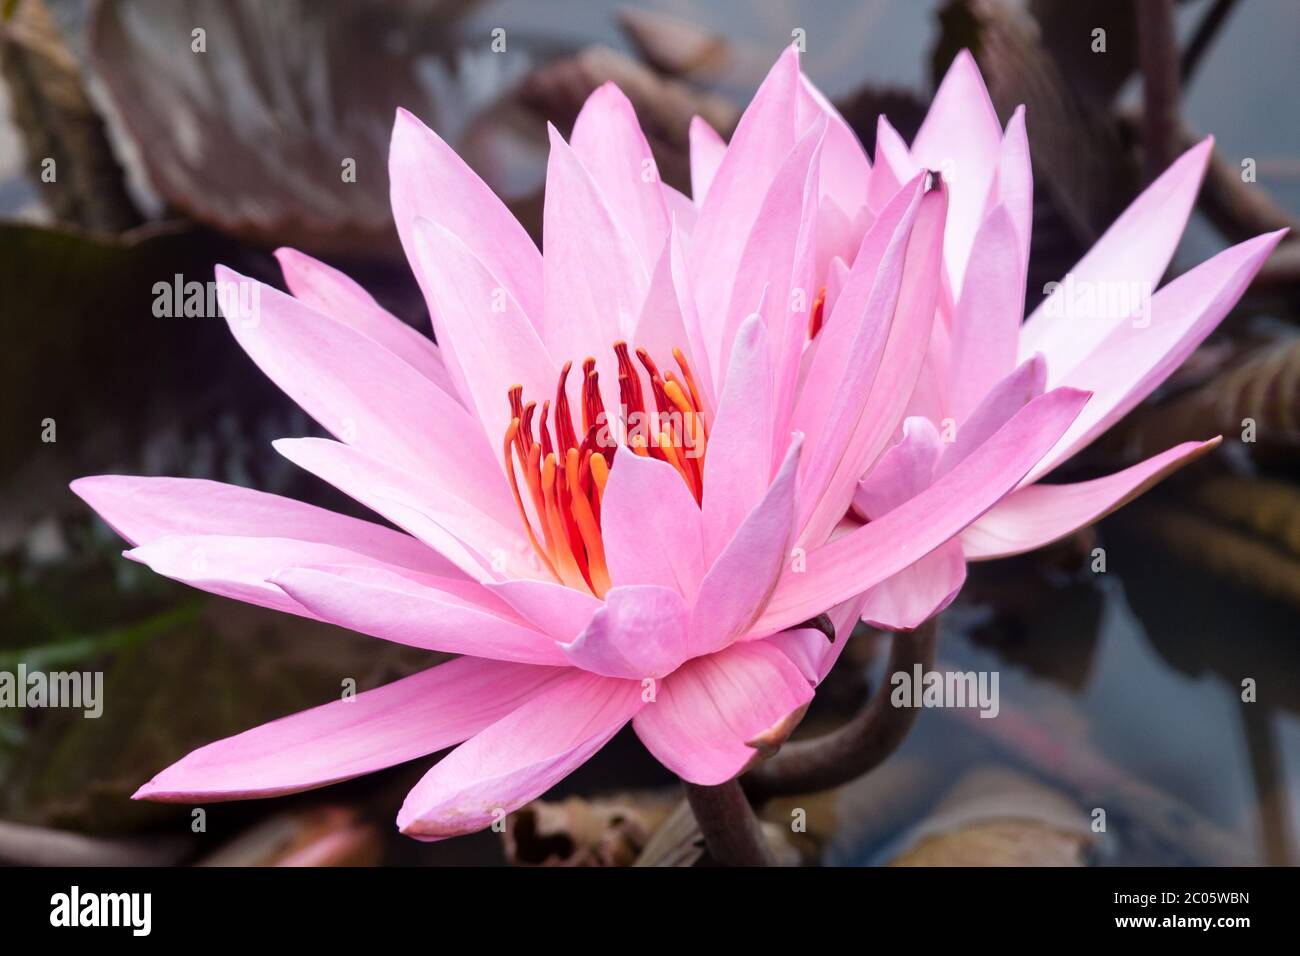 Wilde rosa wasser lilie oder Lotusblume (Nelumbo nucifera) im Wasser. Nymphaea im Teich. Indonesien, Papua Neu Guinea Stockfoto